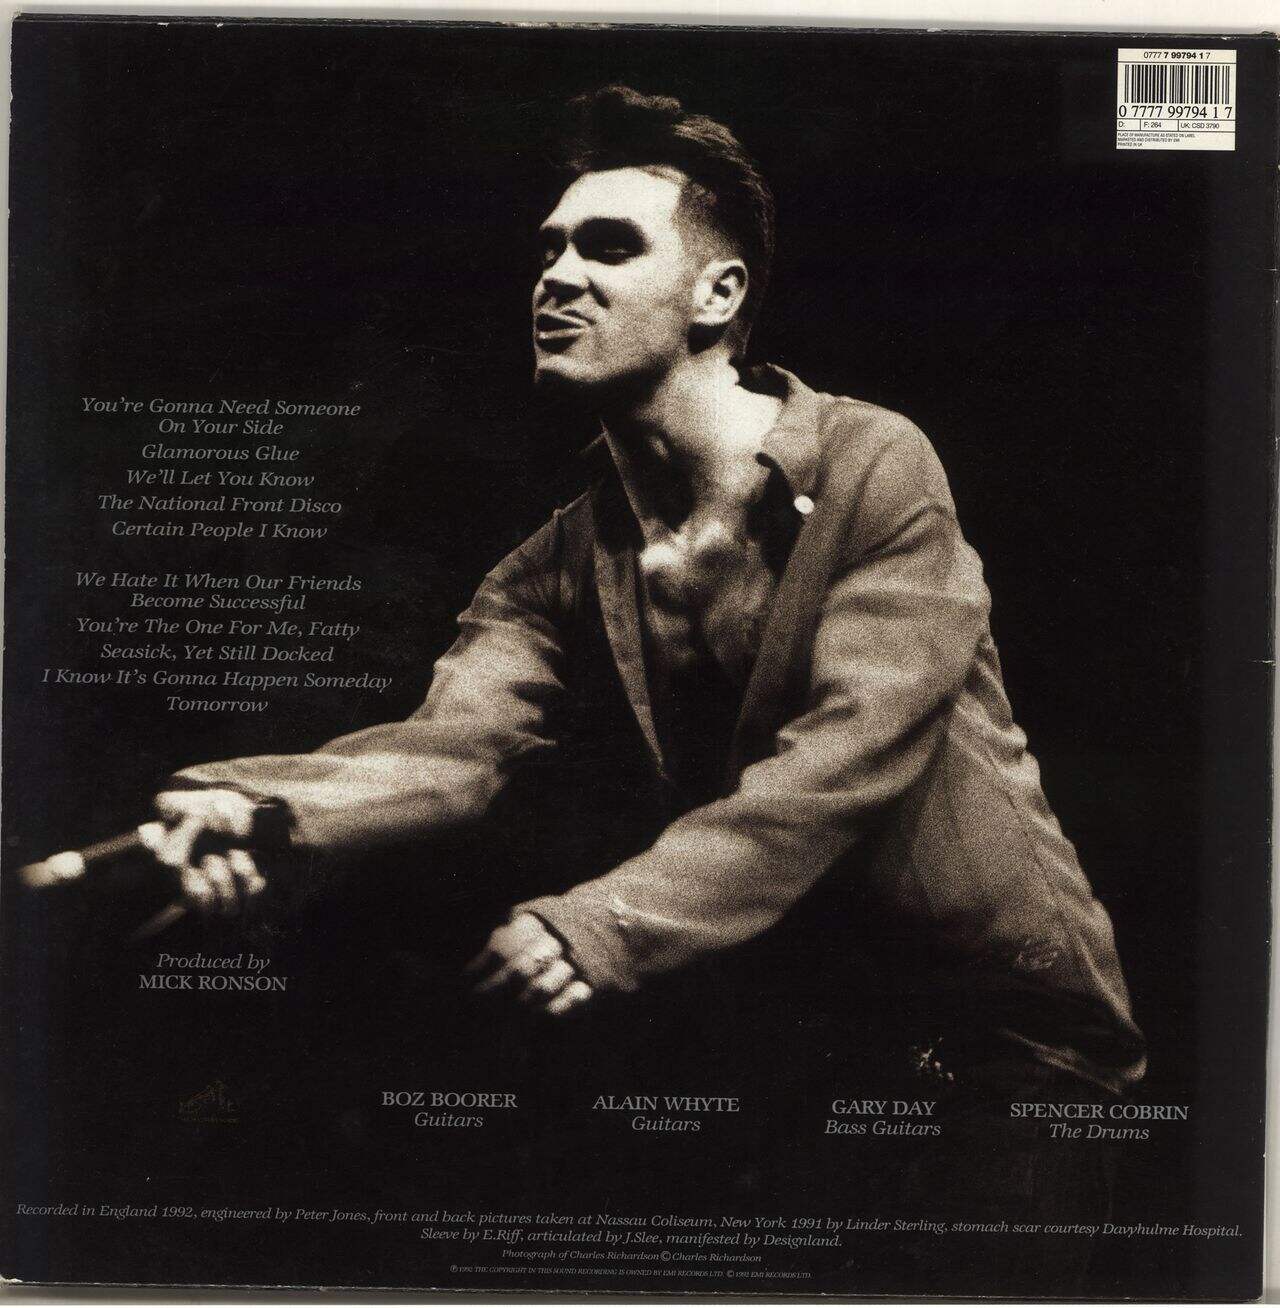 Morrissey Your Arsenal - EX UK Vinyl LP